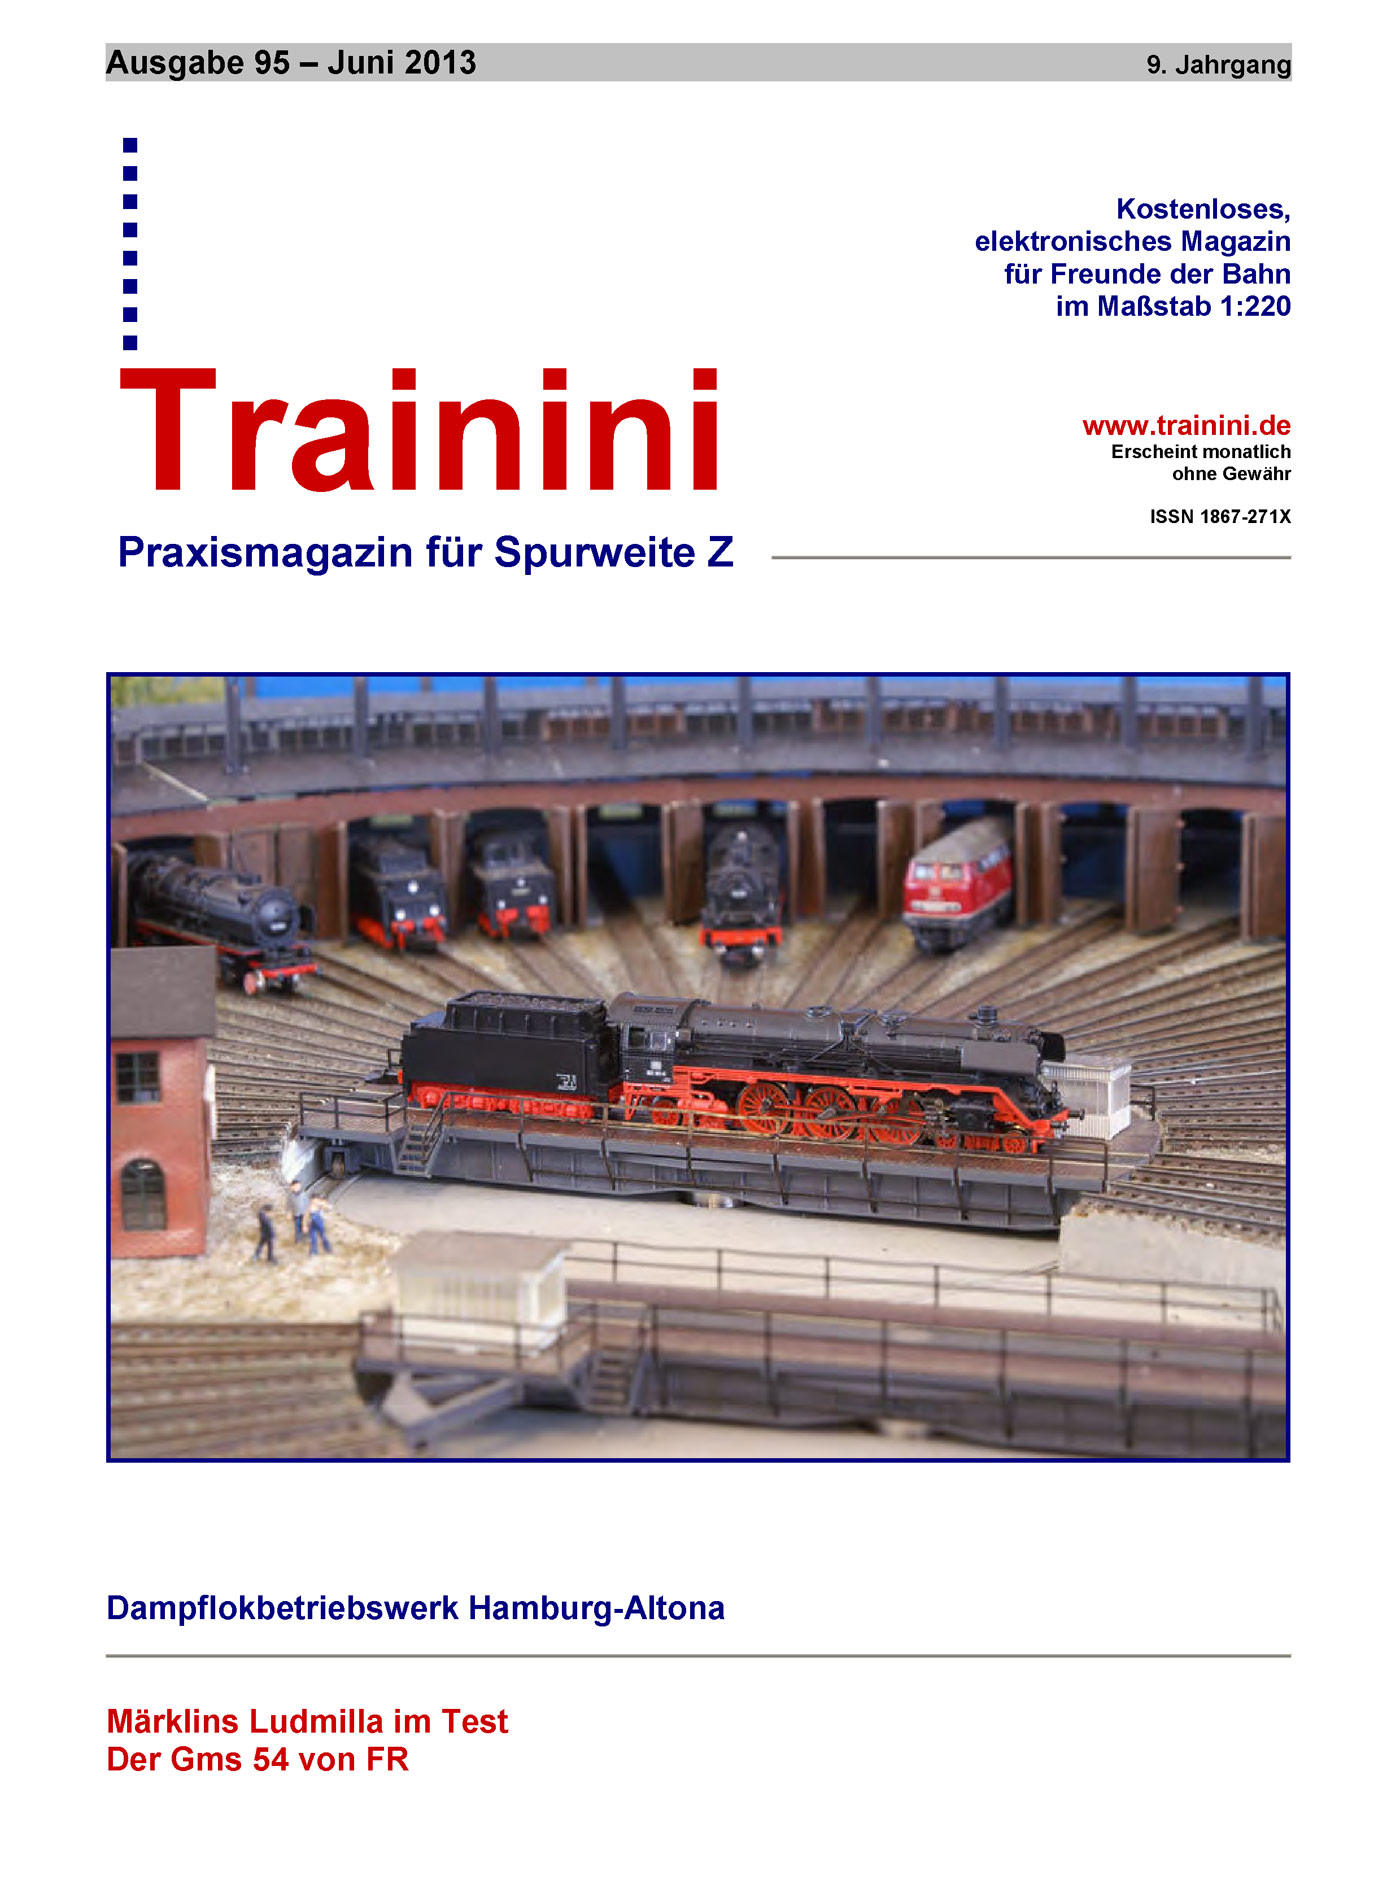 Trainini Ausgabe Juni 2013